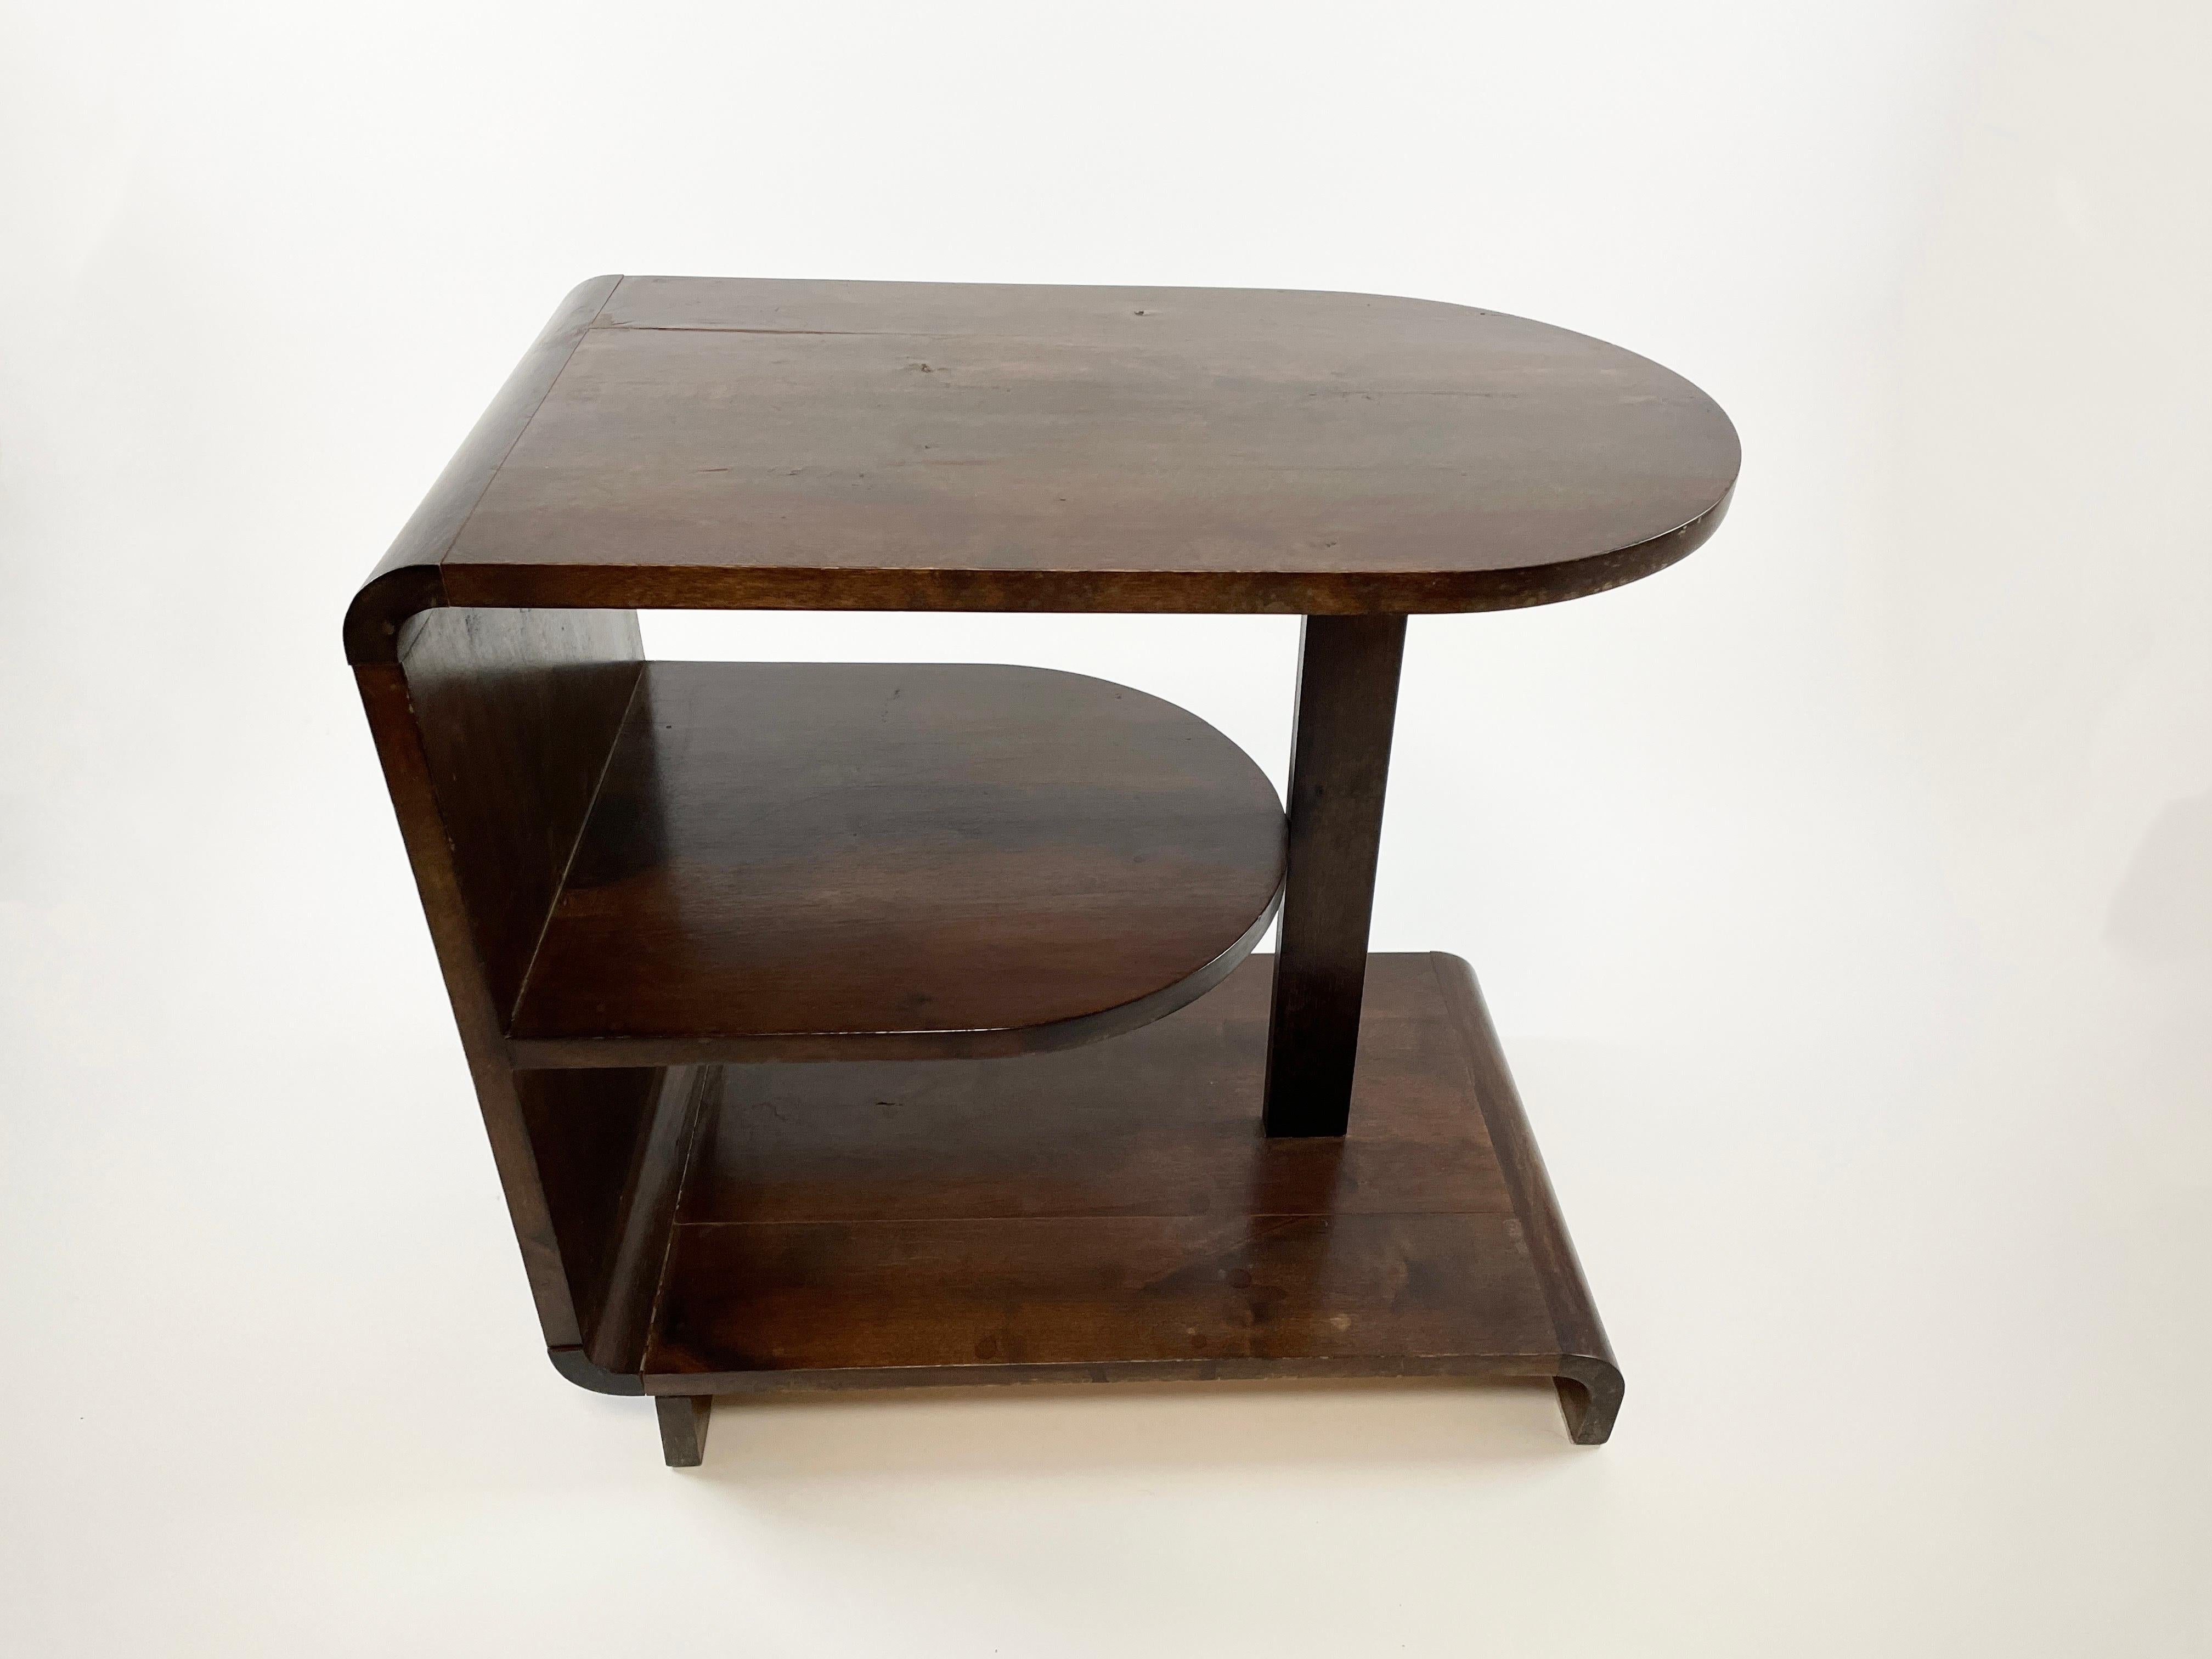 Scandinavian Modern Finnish Modern Apu 604 Side Table by Maija Heikinheimo for Asko, 1930s For Sale